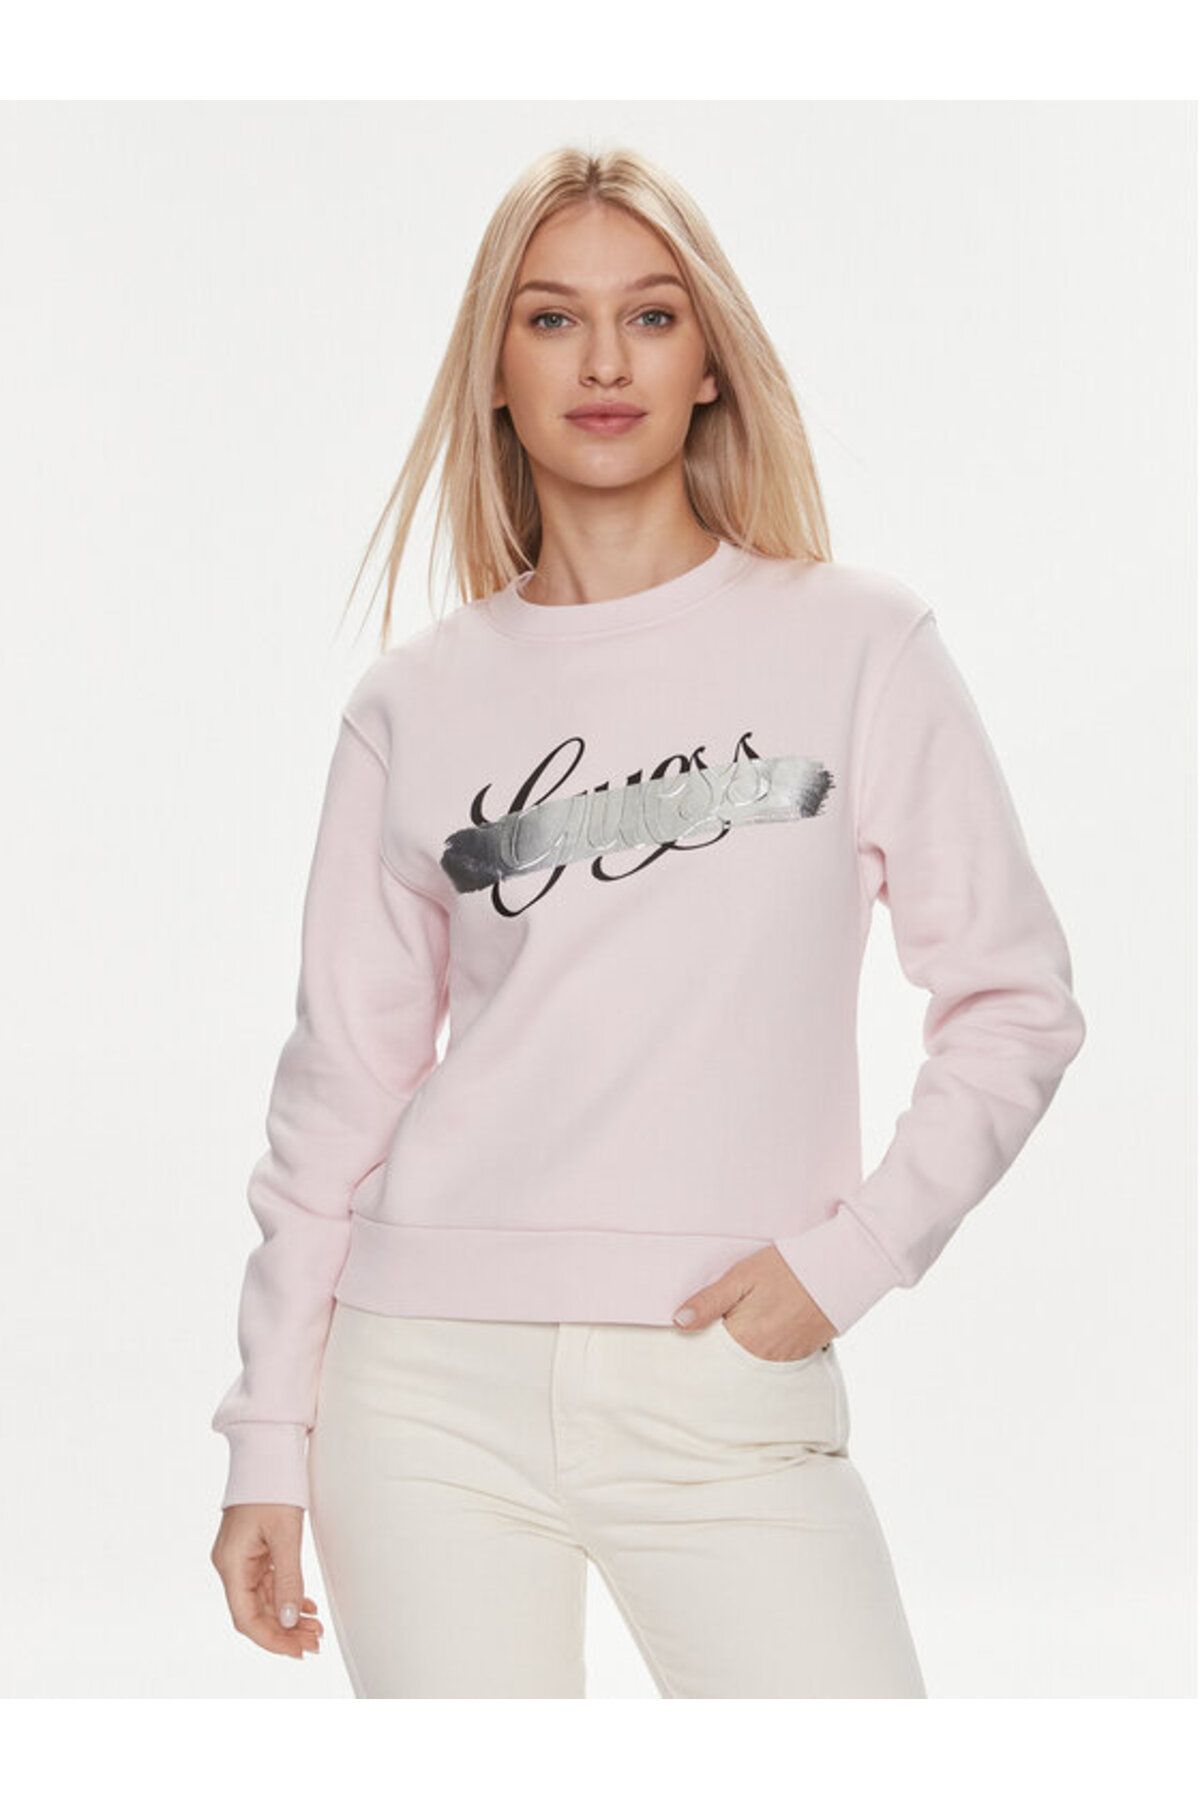 Guess Cn Logo Kadın Sweatshirt